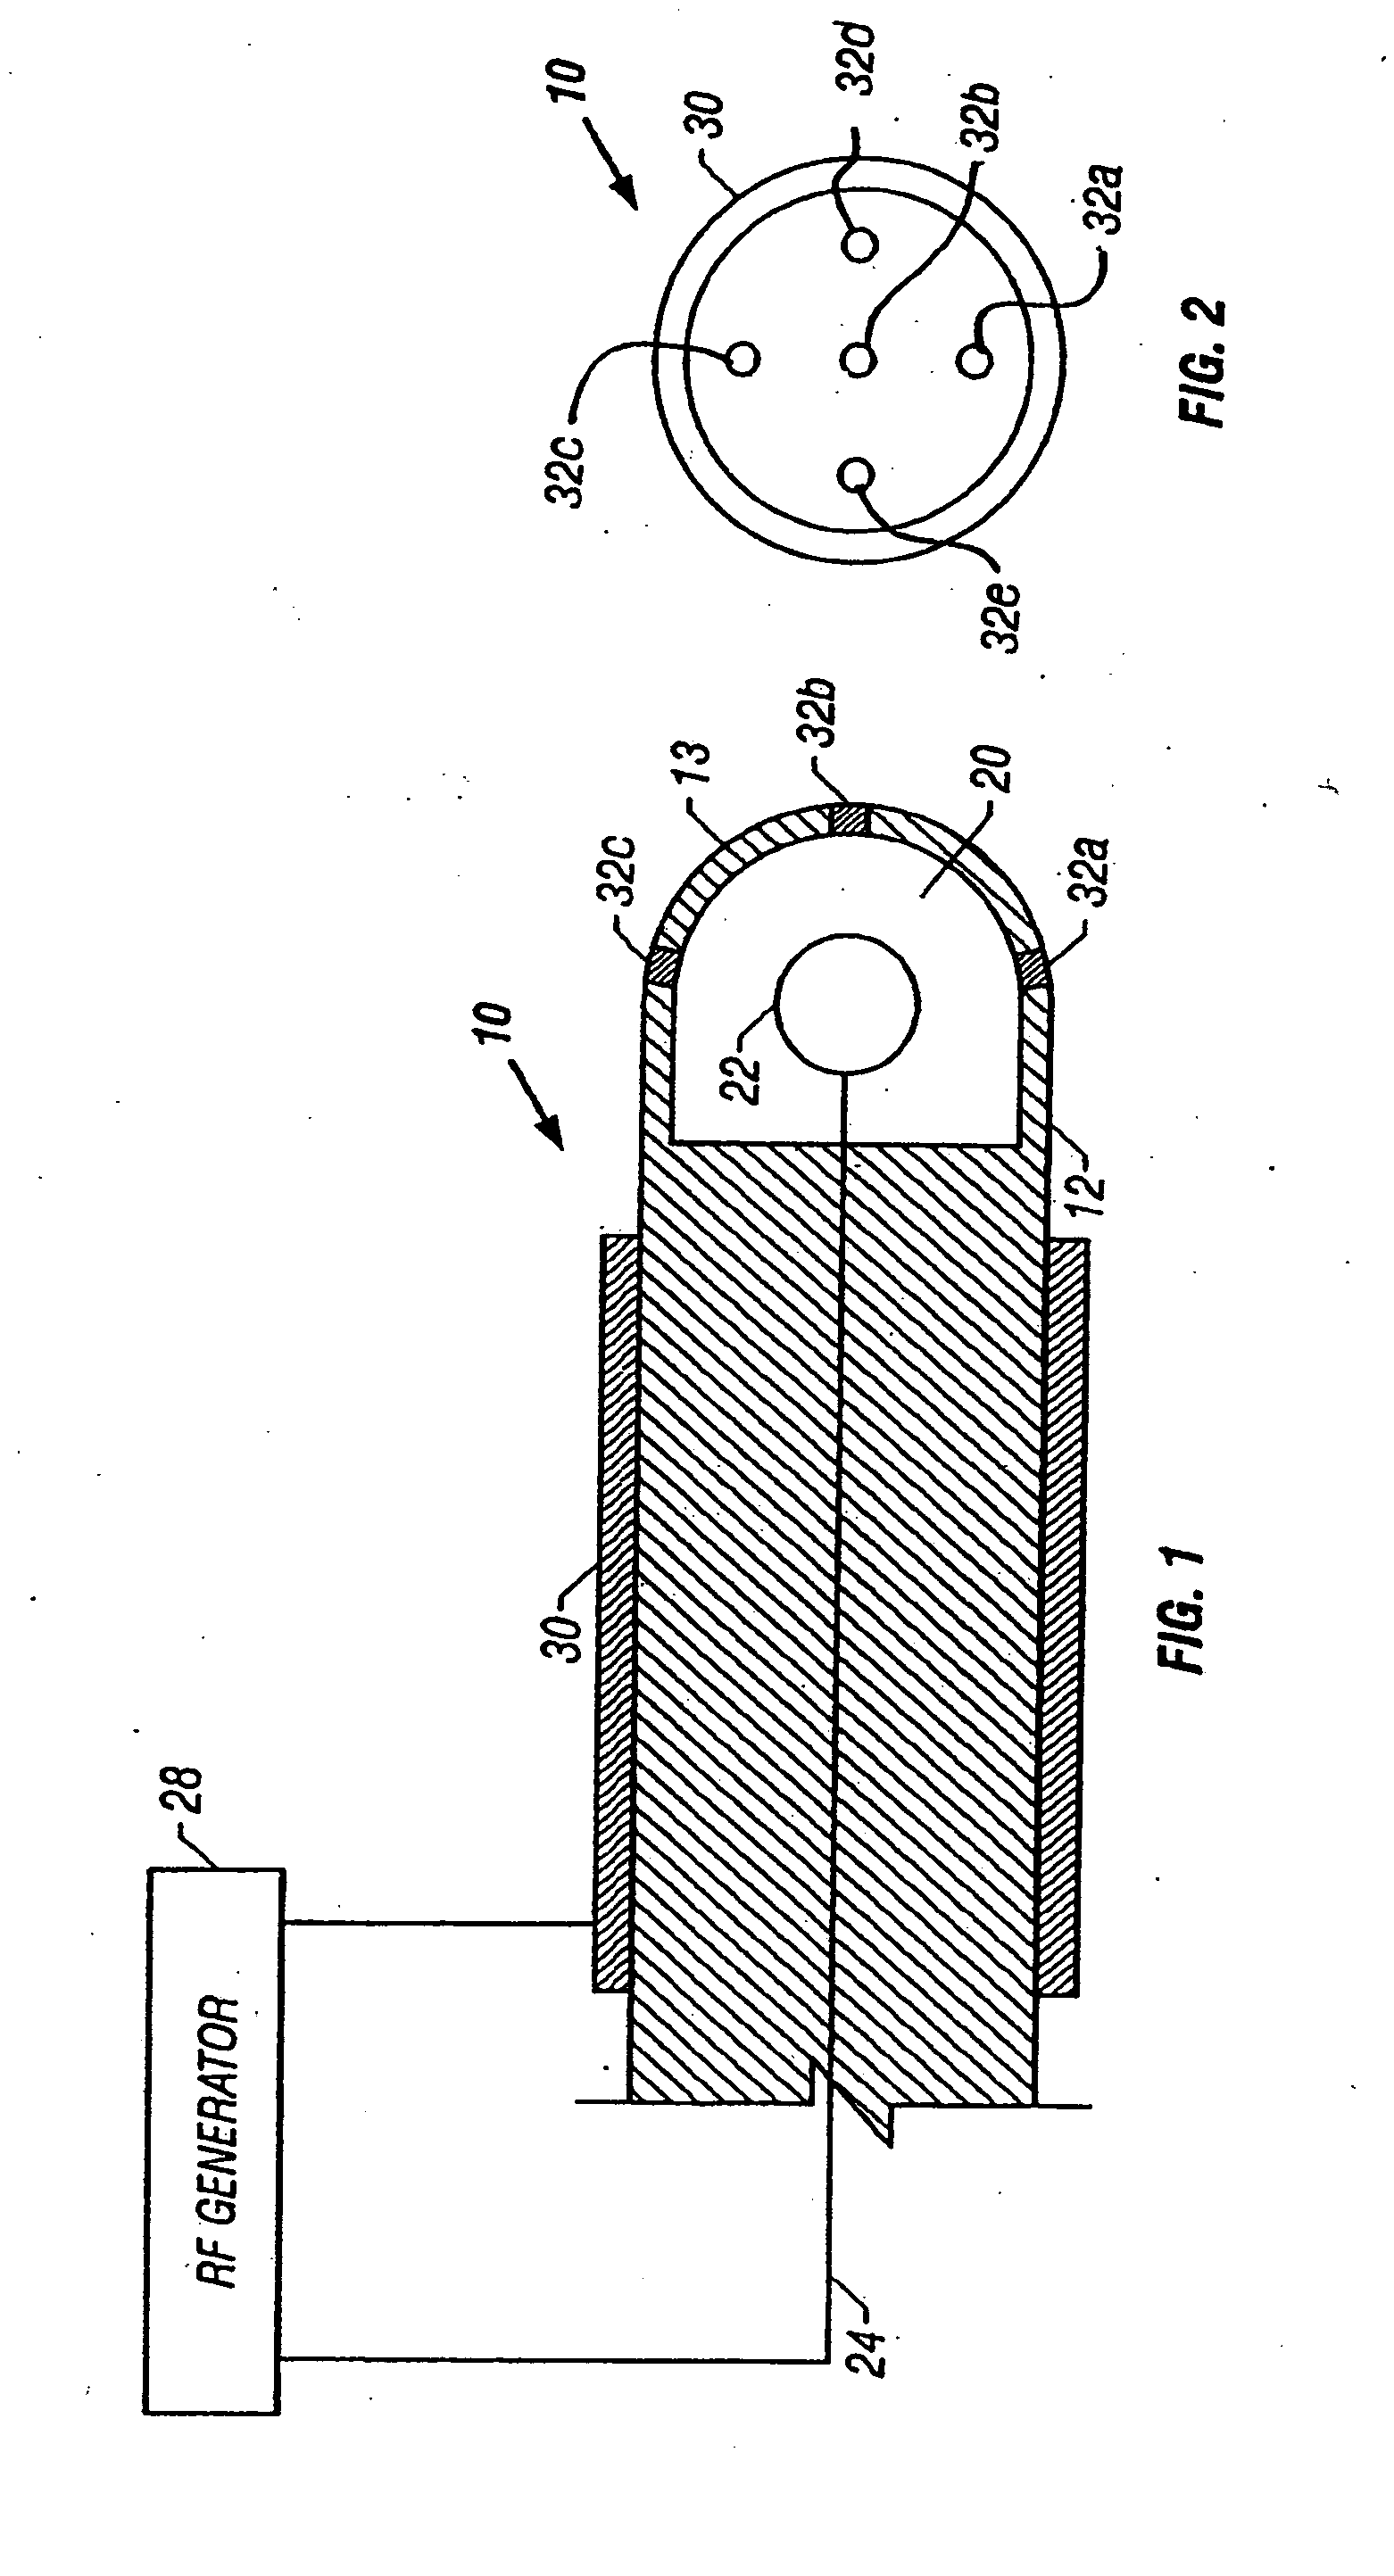 Voltage threshold ablation apparatus